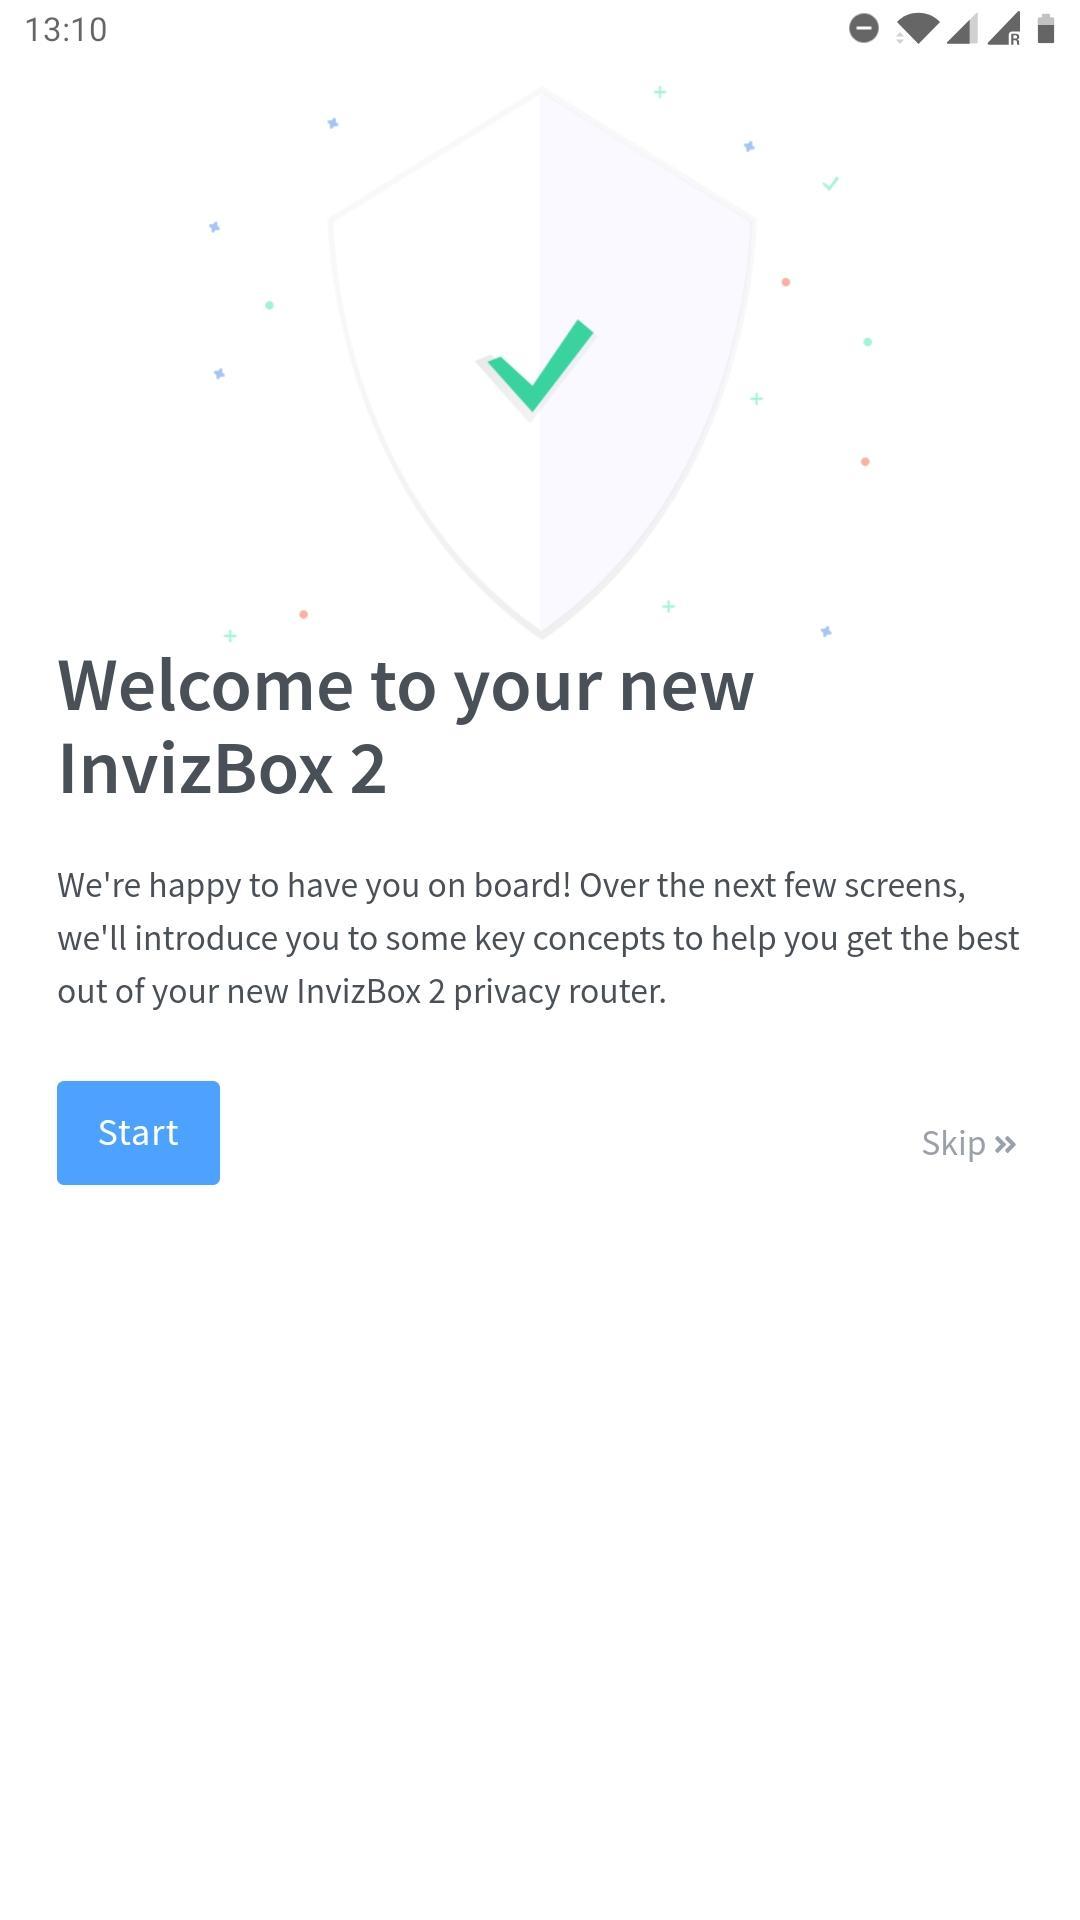 Invizbox: Privacy Made Easy